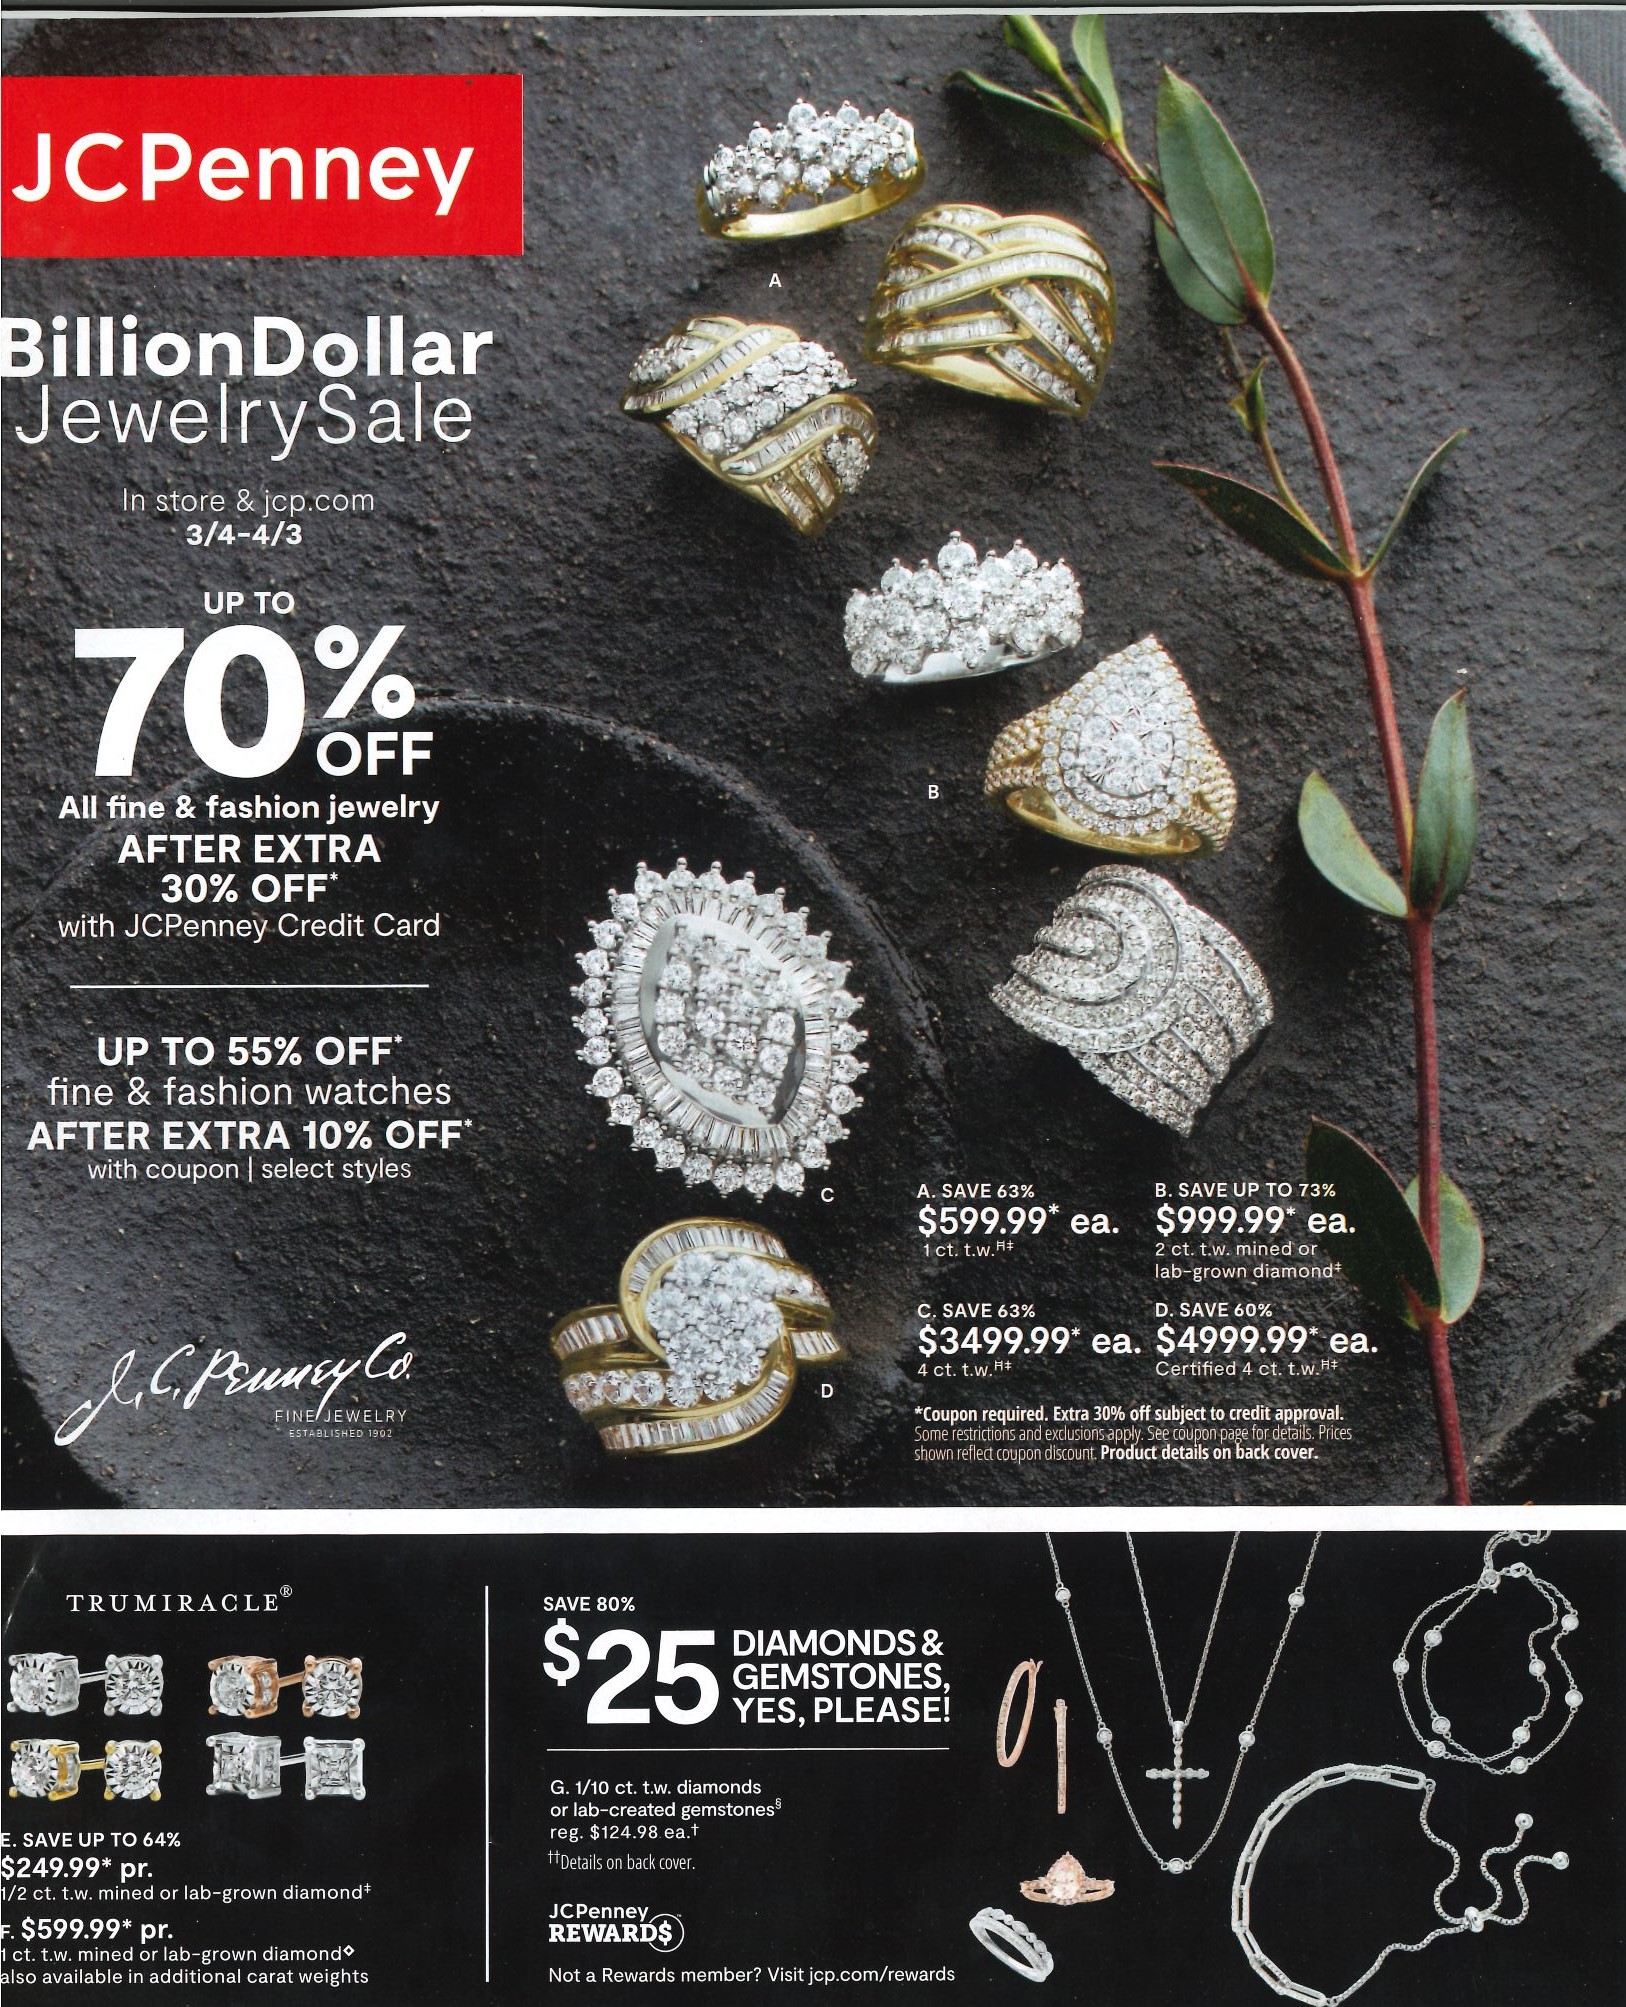 JCP Billion Dollar Jewelry Sale Cover